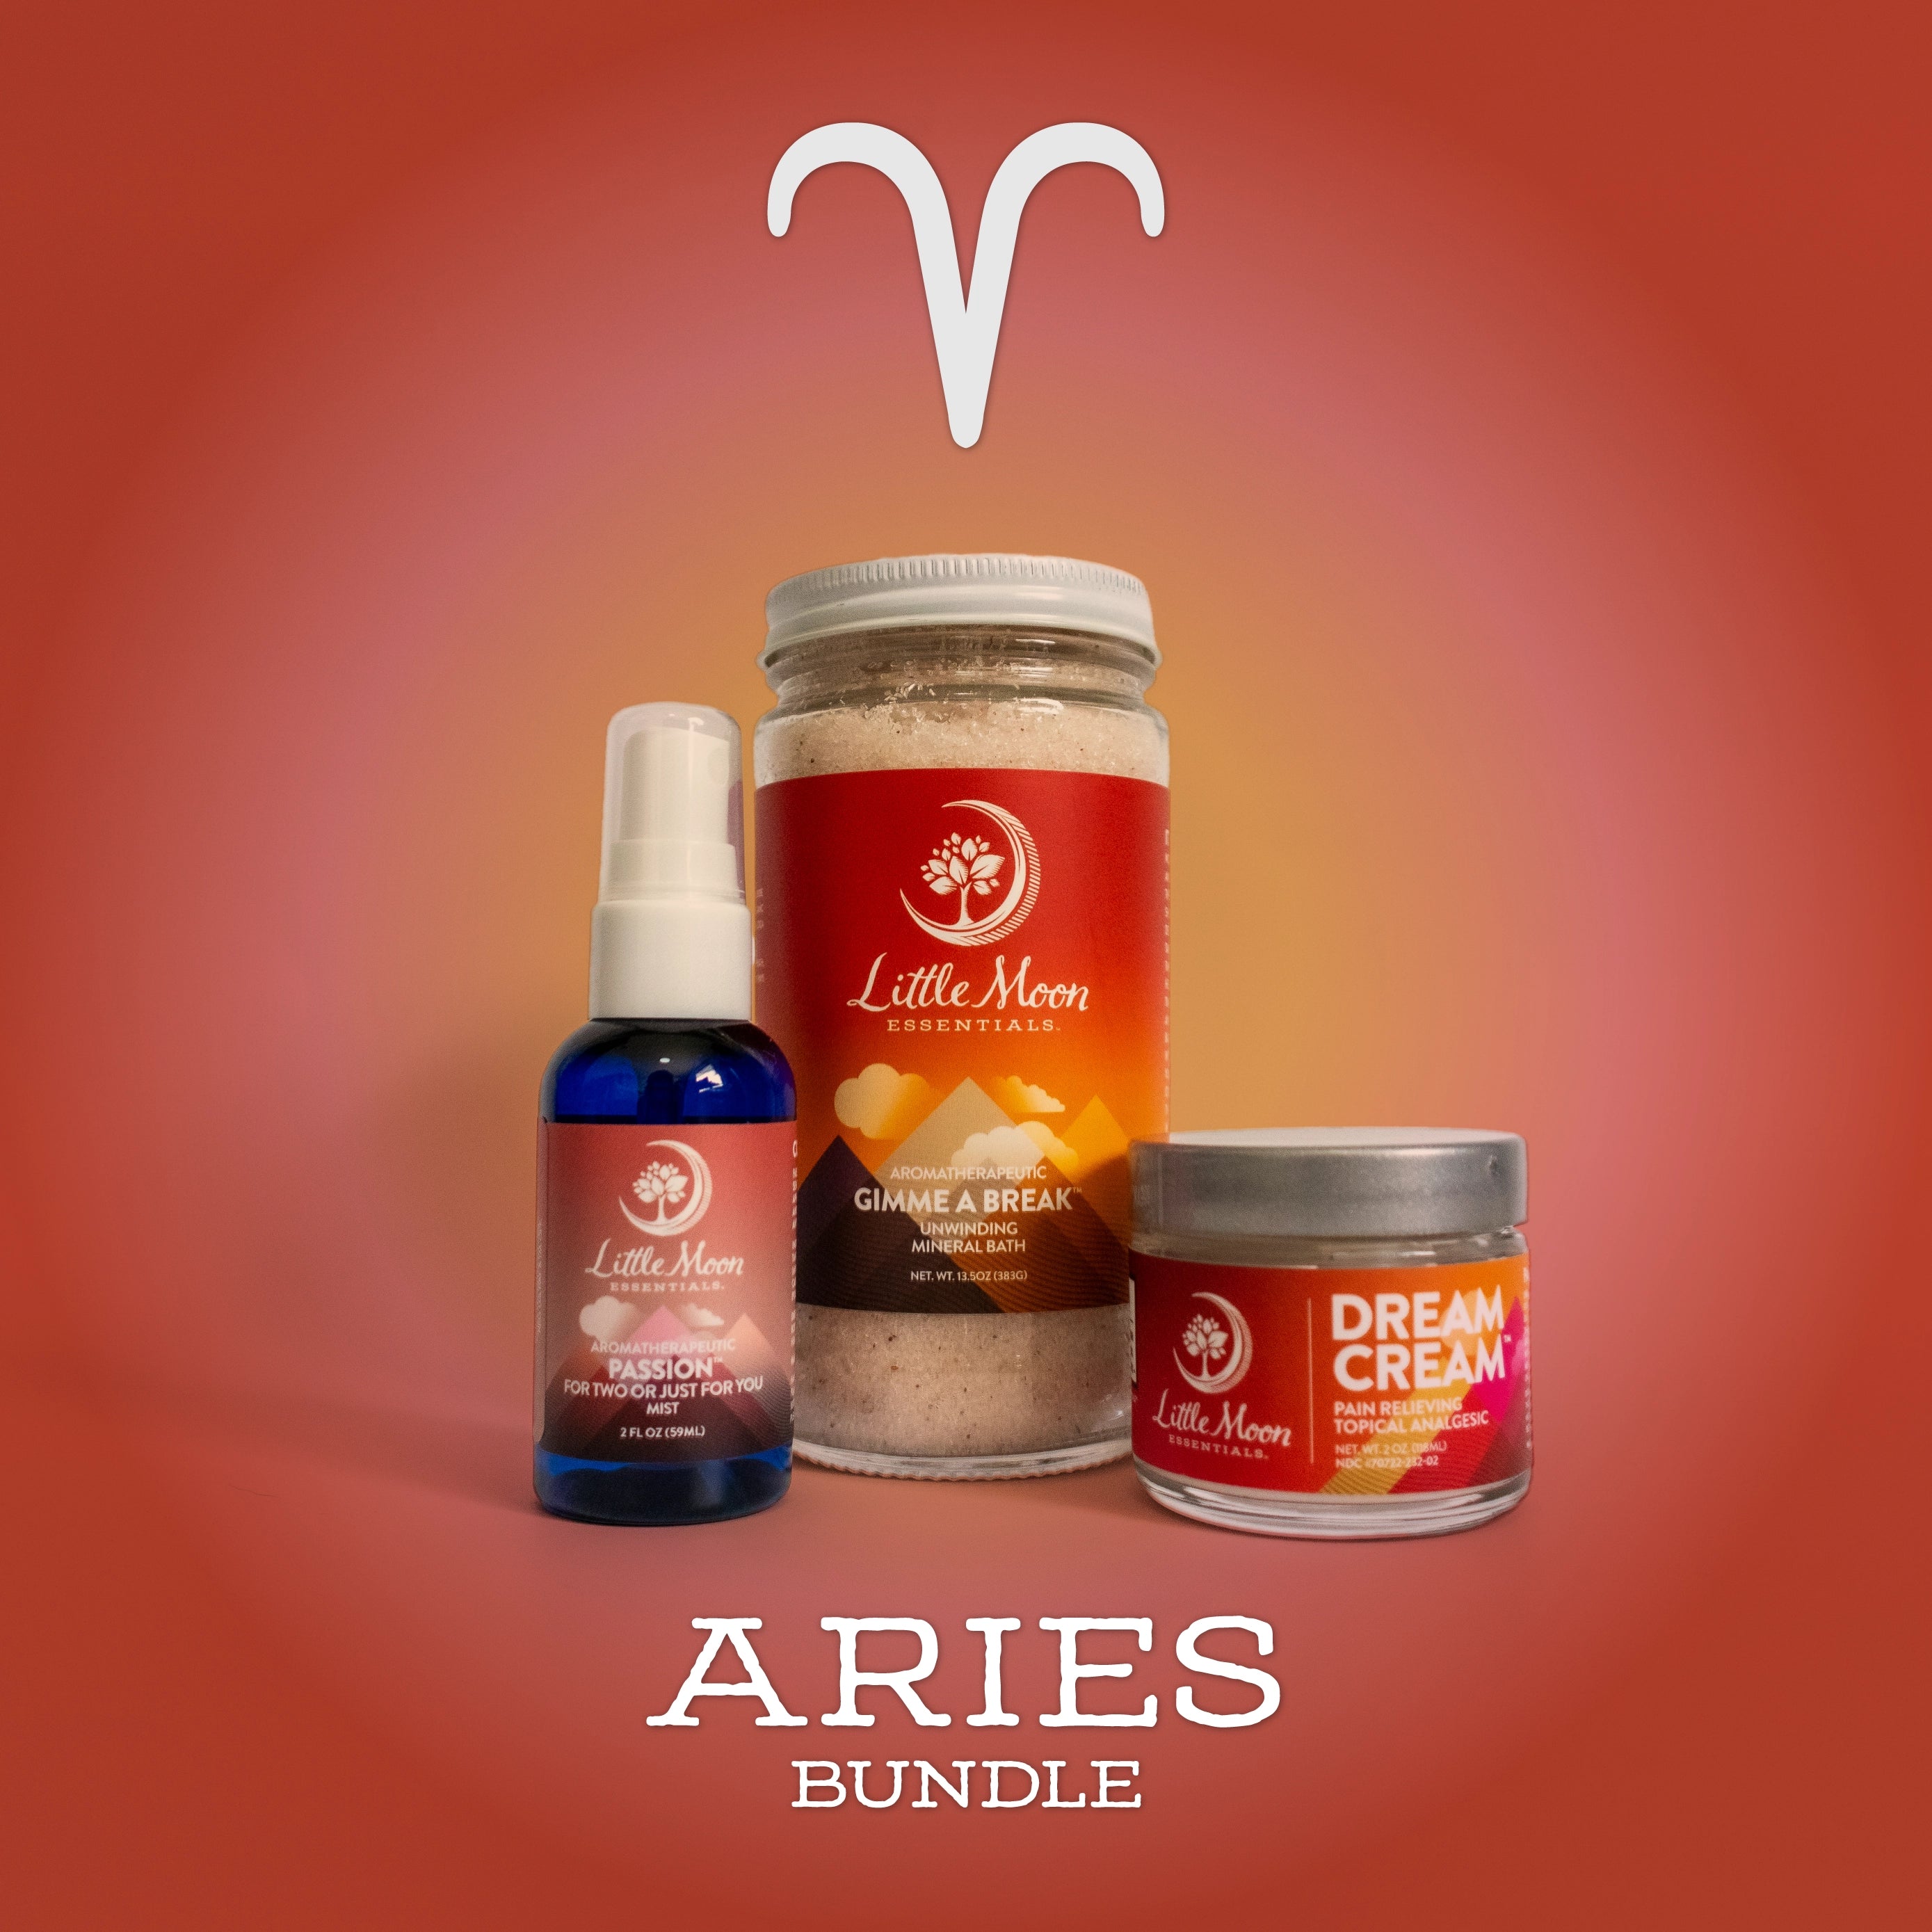 Aries Bundle - Little Moon Essentials